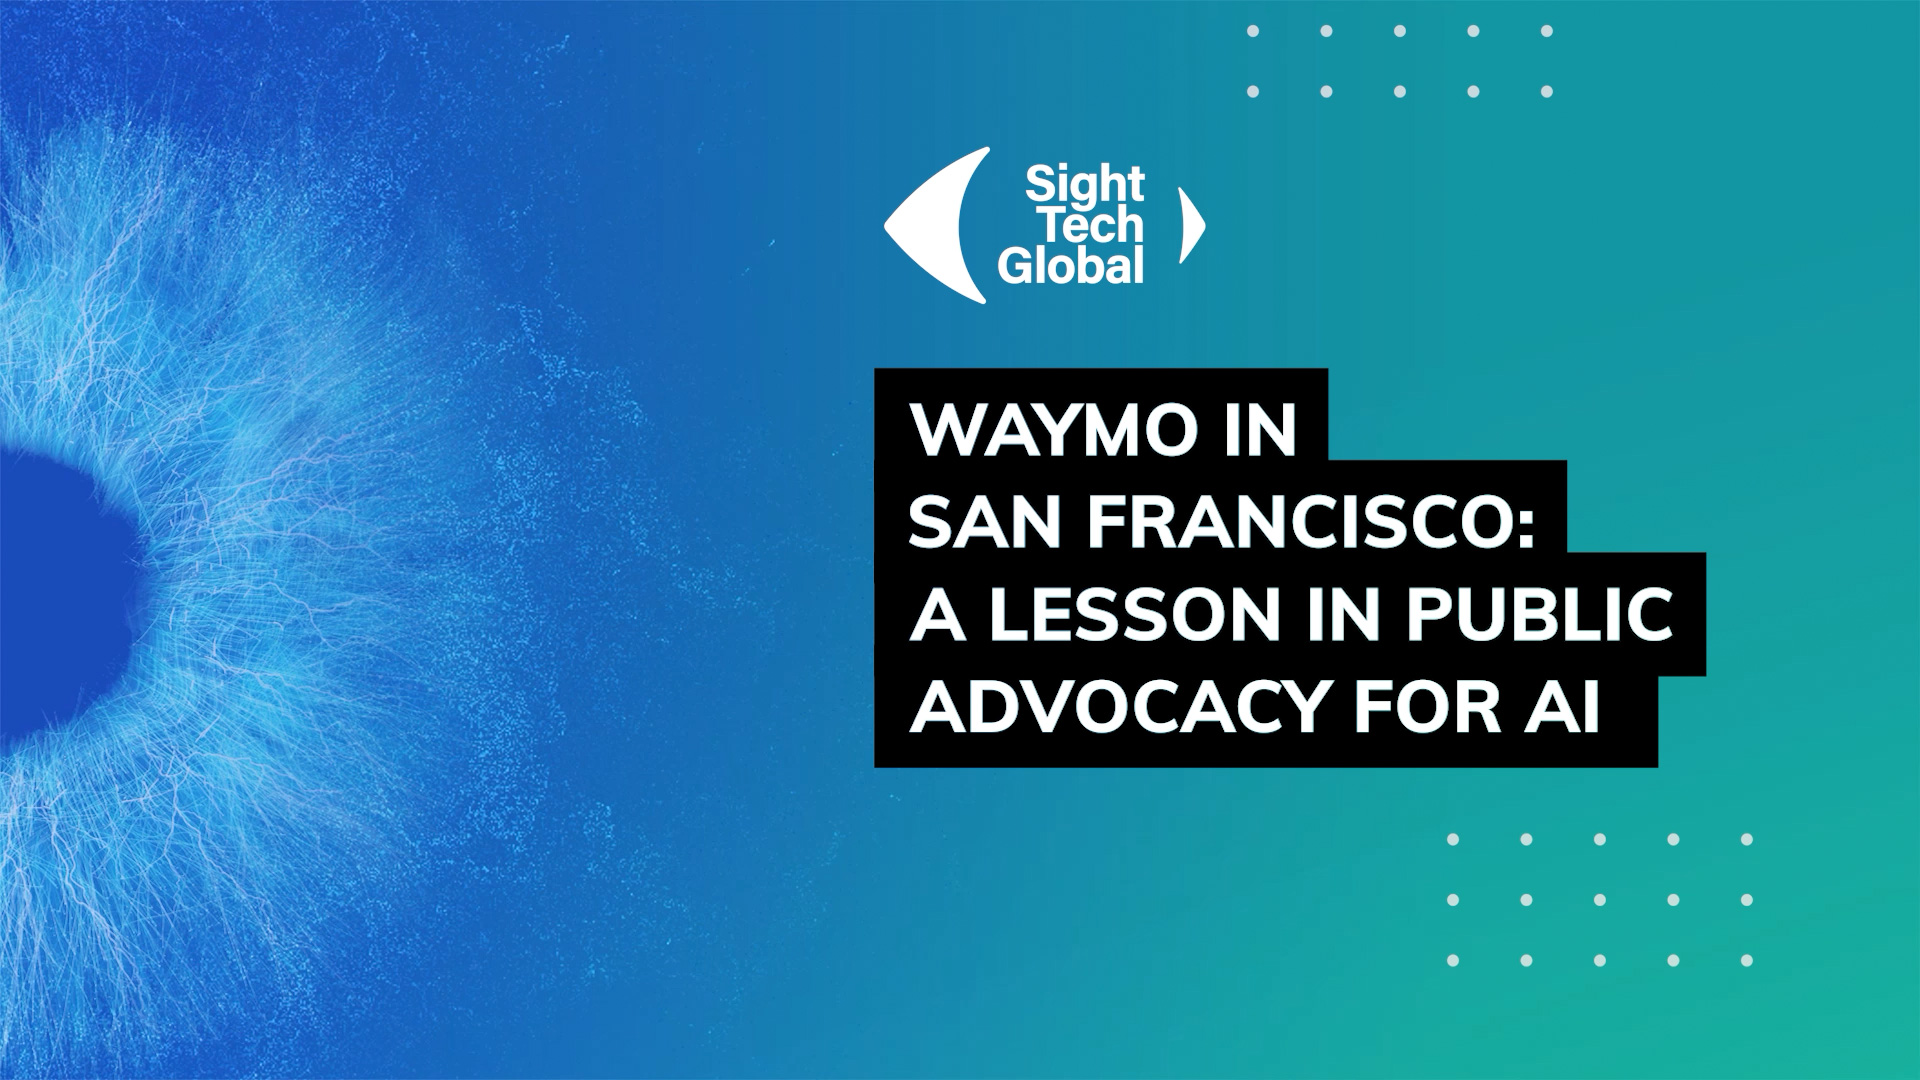 Waymo in San Francisco: A lesson in public advocacy for AI